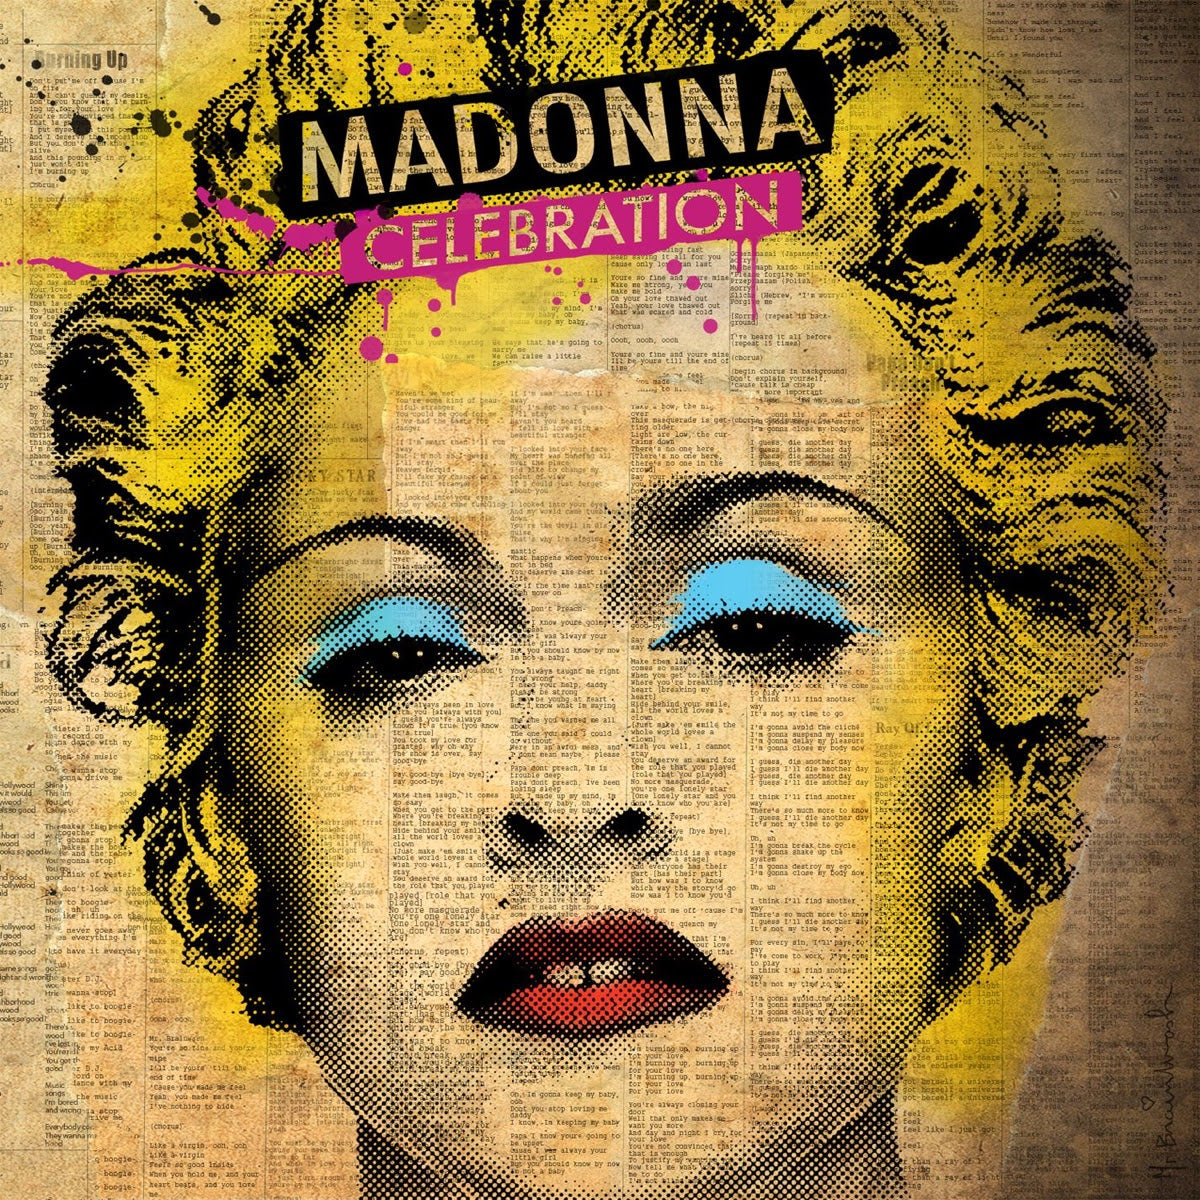 Madonna - Celebration | Buy the Vinyl LP from Flying Nun Records 